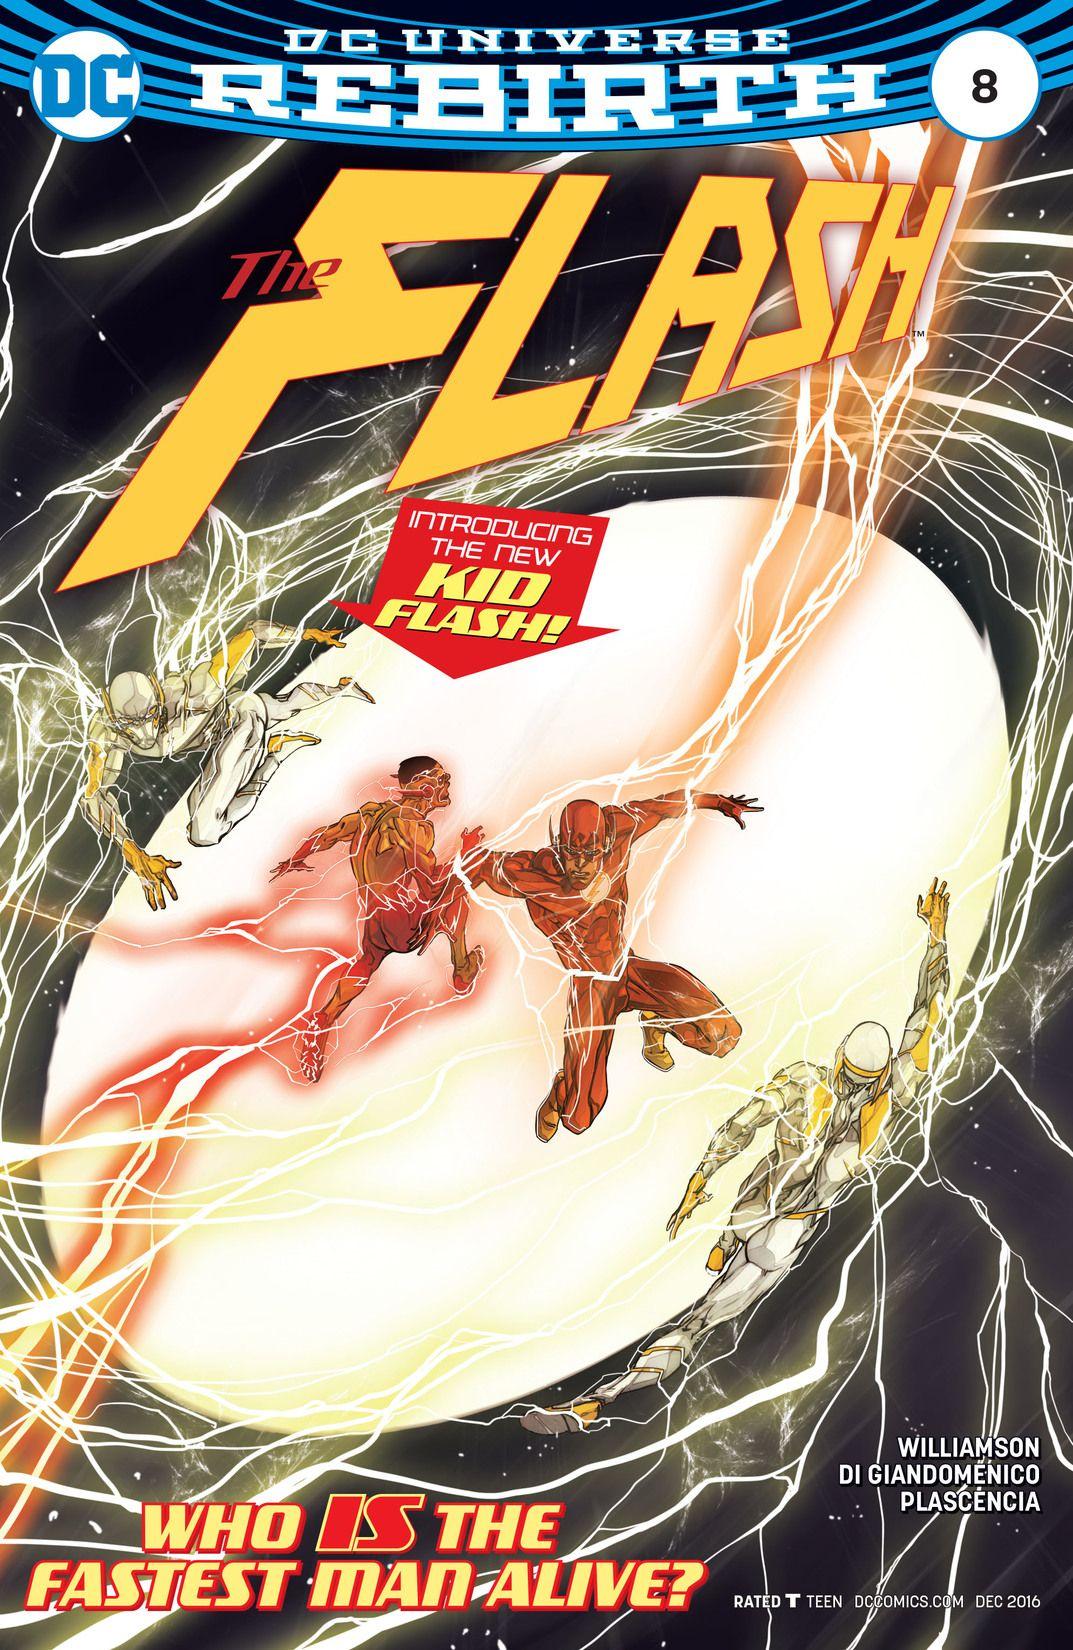 The Flash Vol. 5 #8